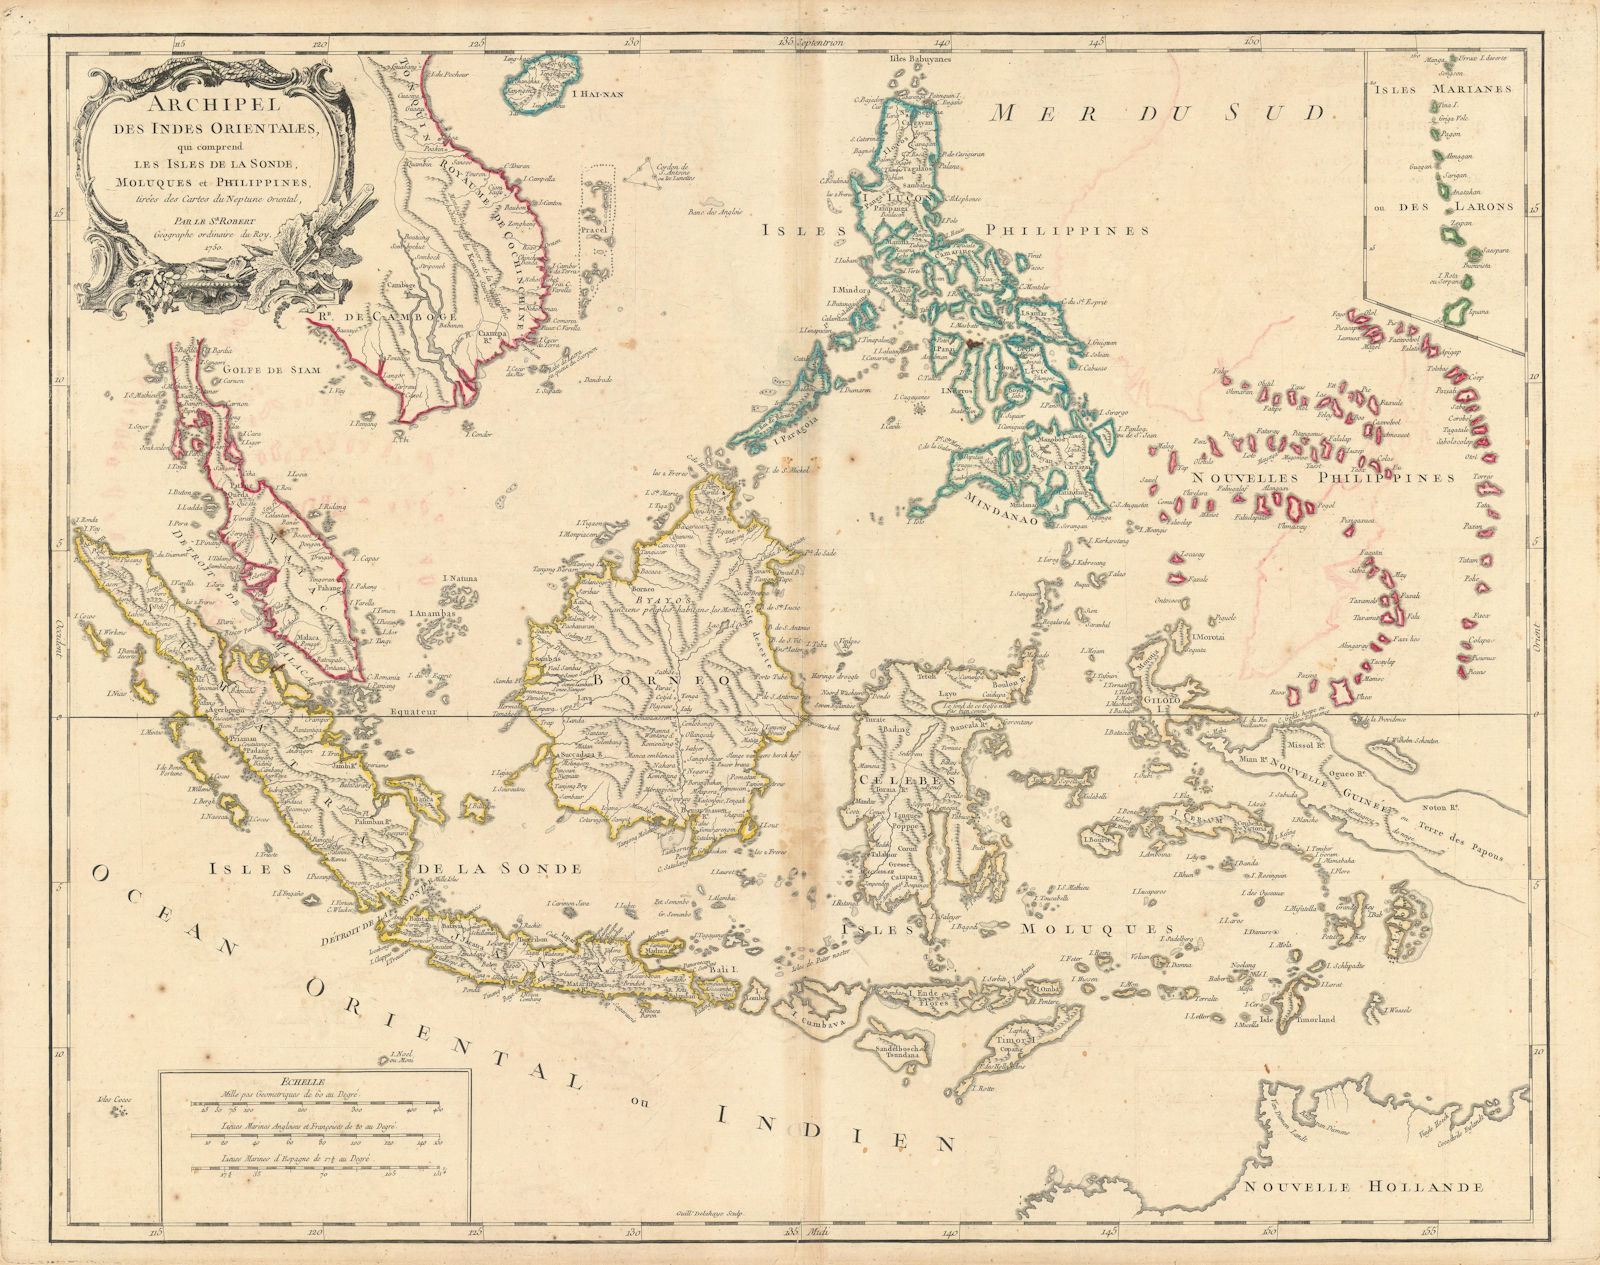 "Archipel des Indes Orientales" E Indies Indonesia Philippines VAUGONDY 1750 map